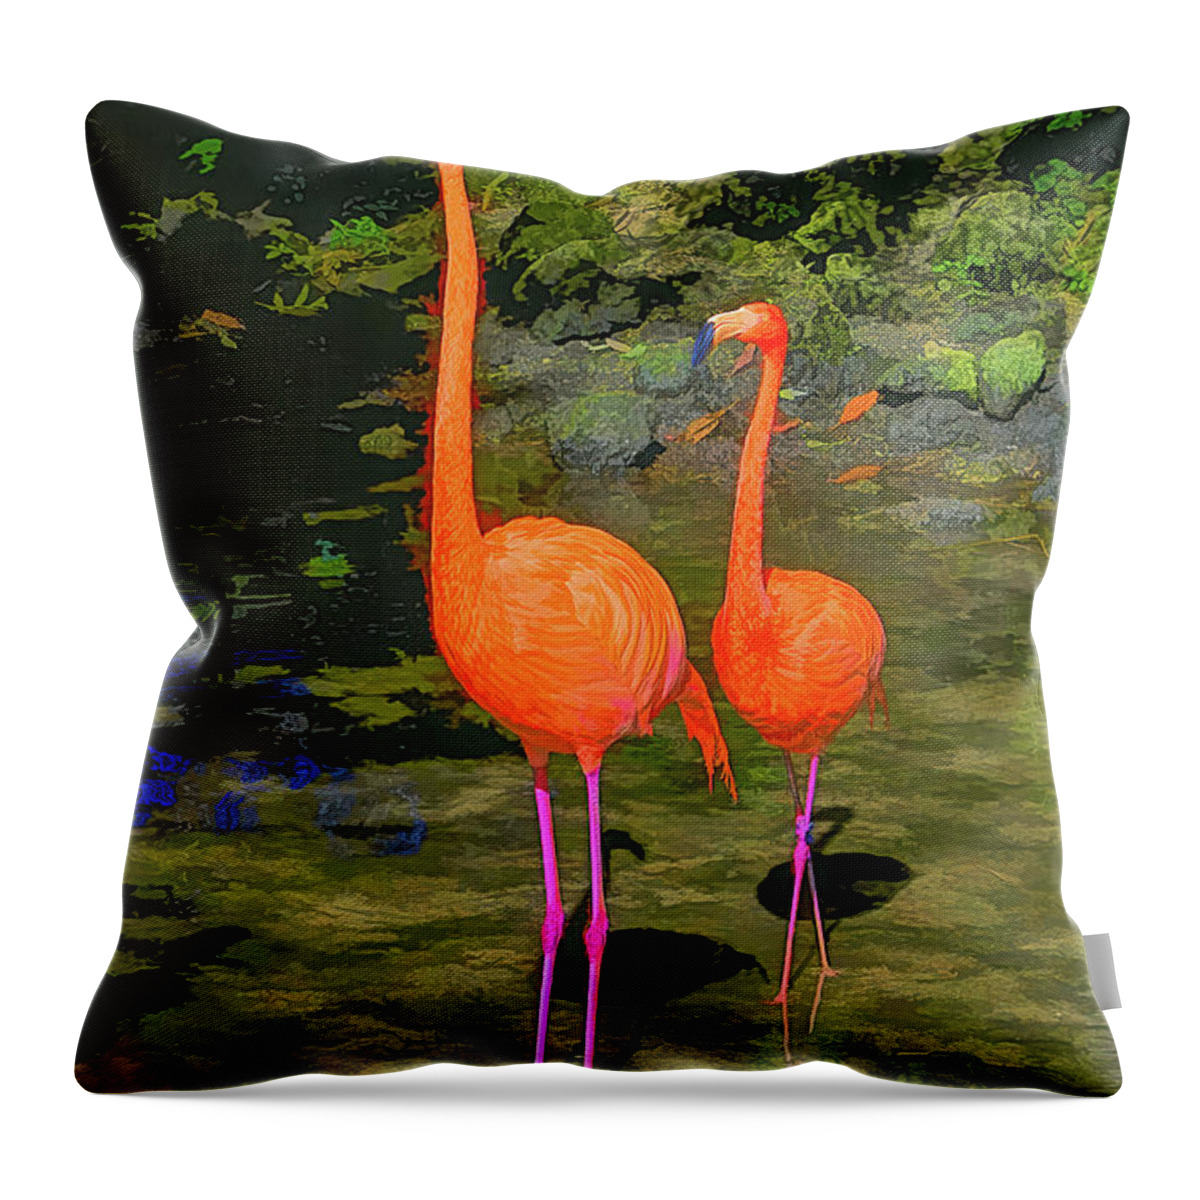 Flamingo Throw Pillow featuring the photograph Flamingo by Alison Belsan Horton